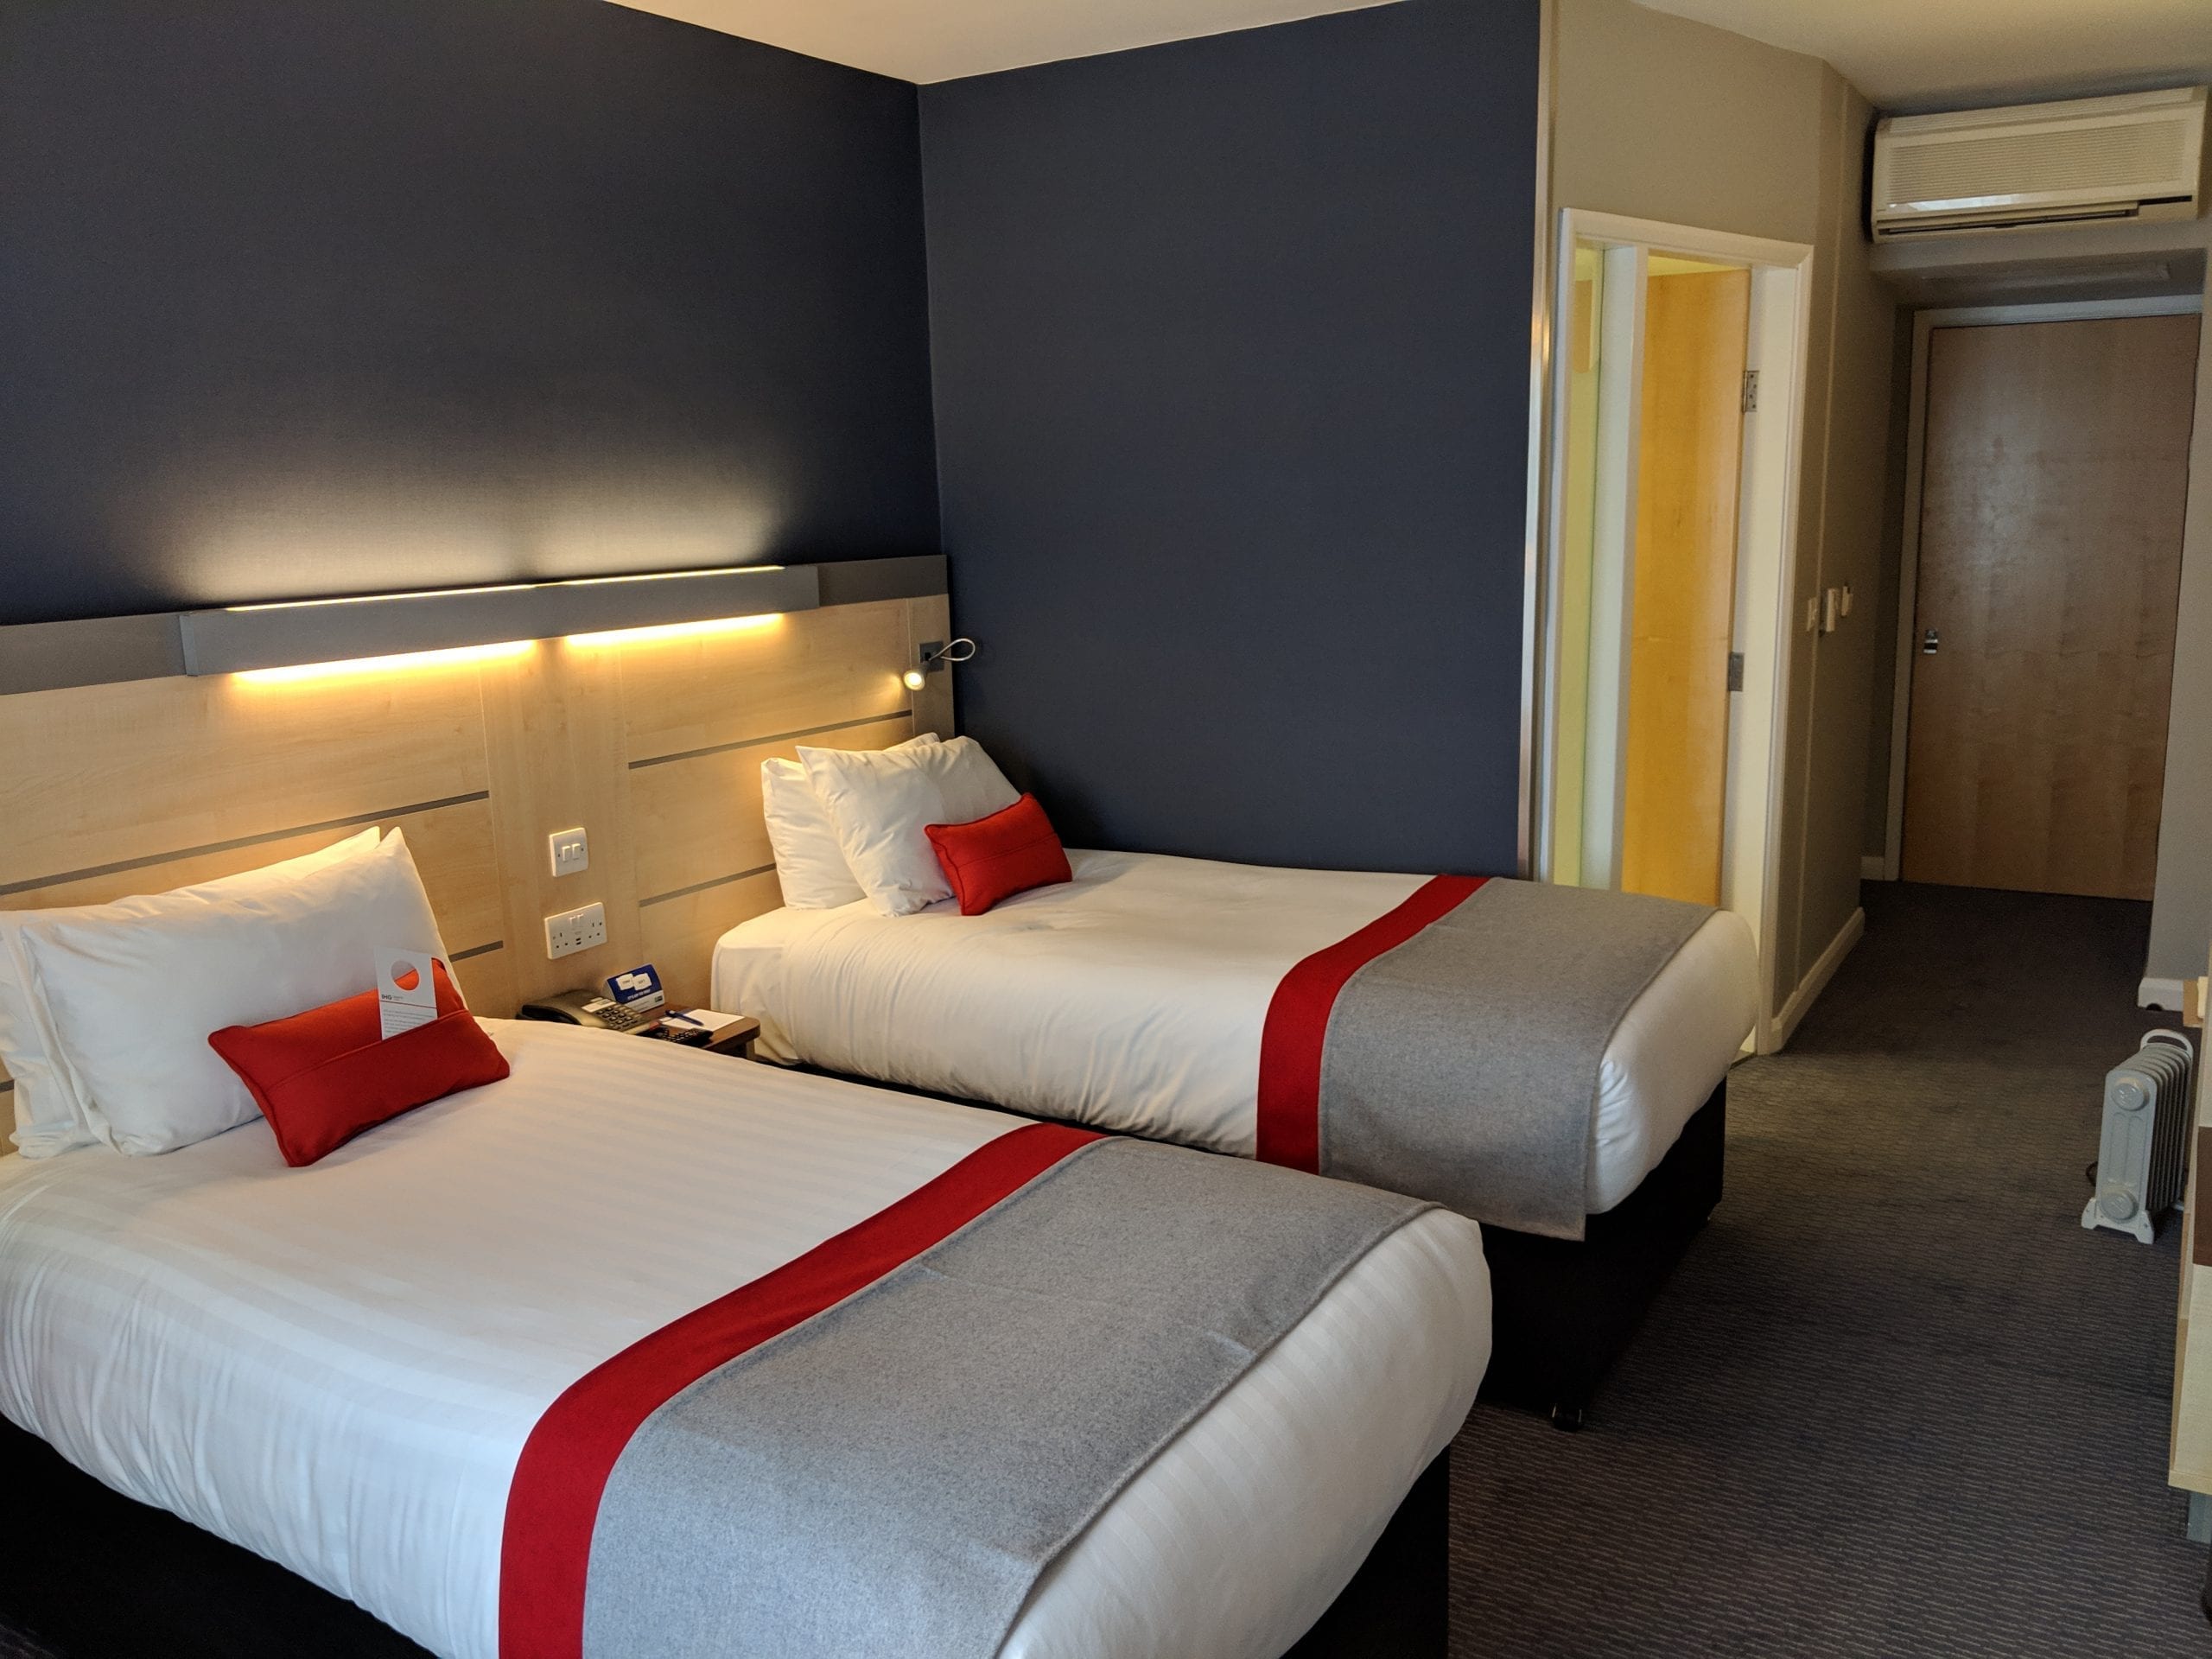 UK Hotel Refurbishment for Holiday Inn scaled